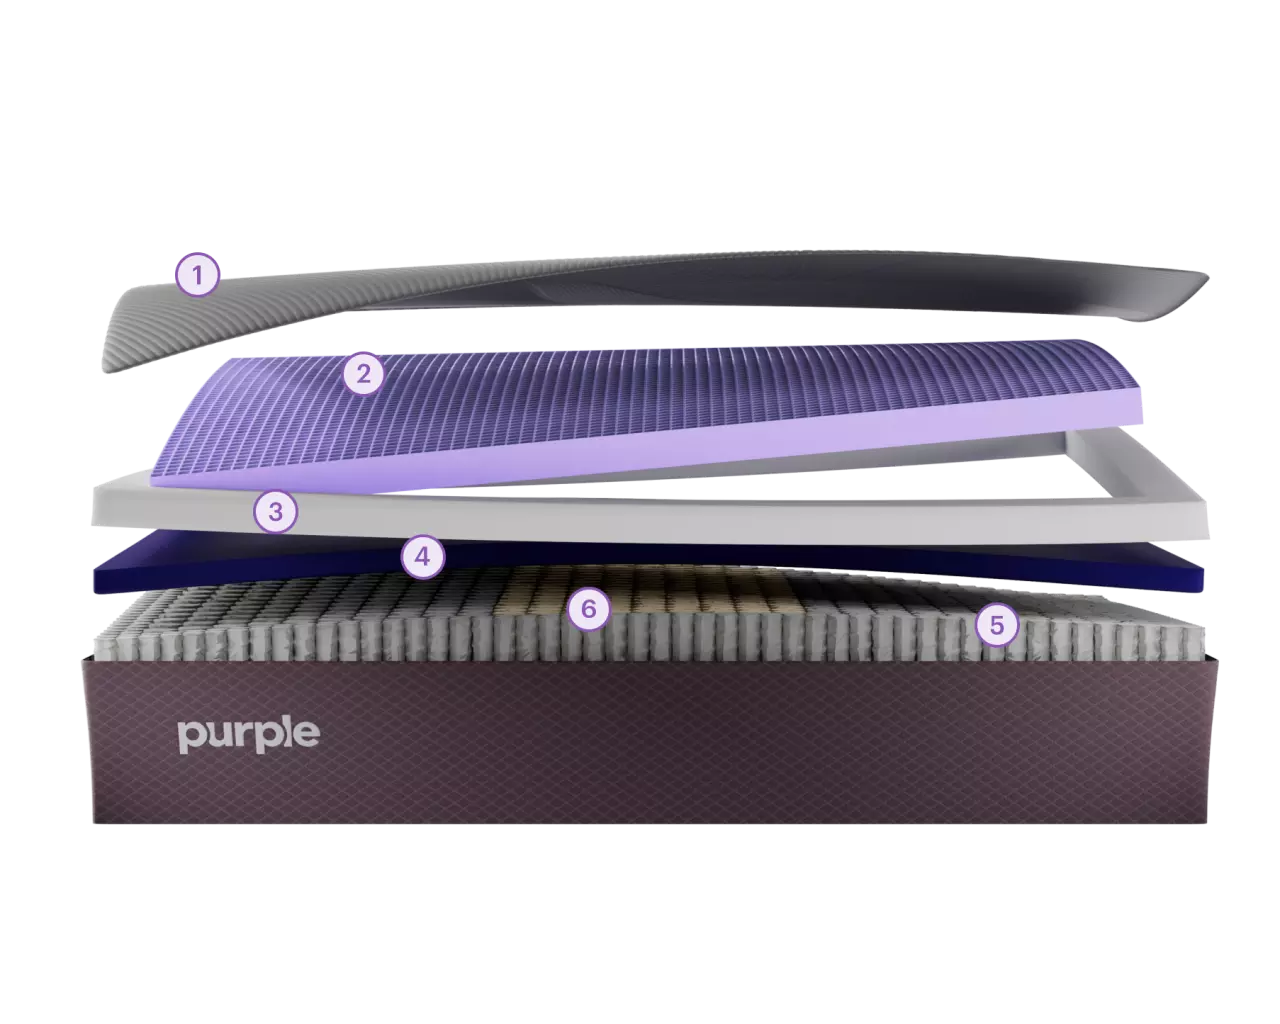 Purple RestorePlus hybrid layers